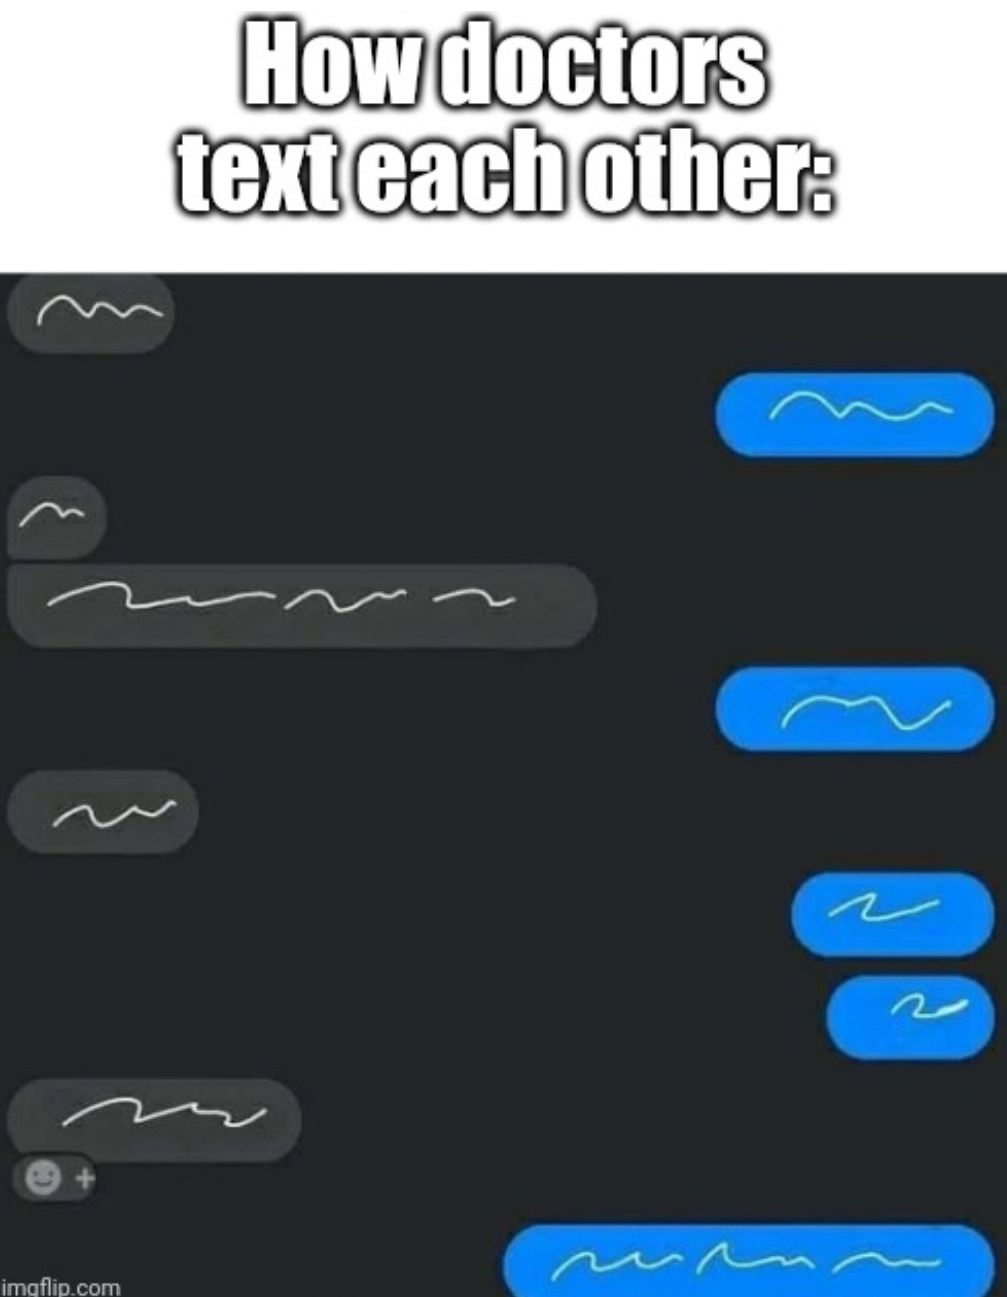 screenshot - How doctors text each other. ~ 2 imgflip.com